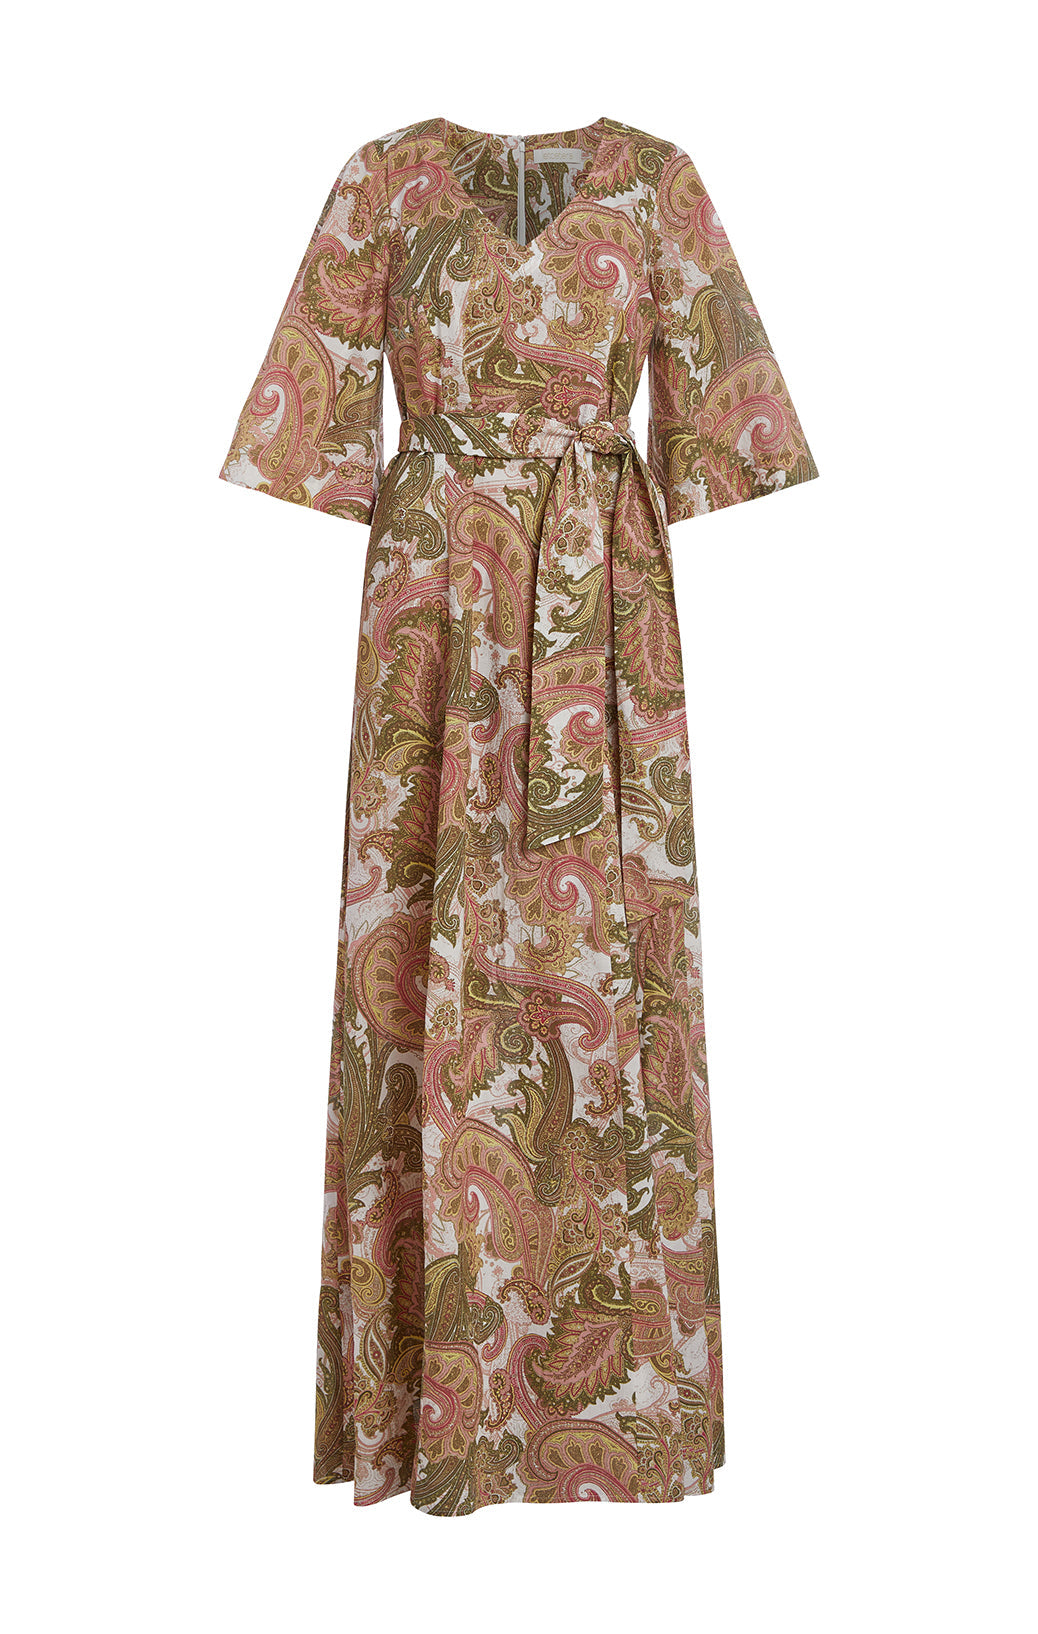 Sensation - Floral Print Peasant Dress - Product Image